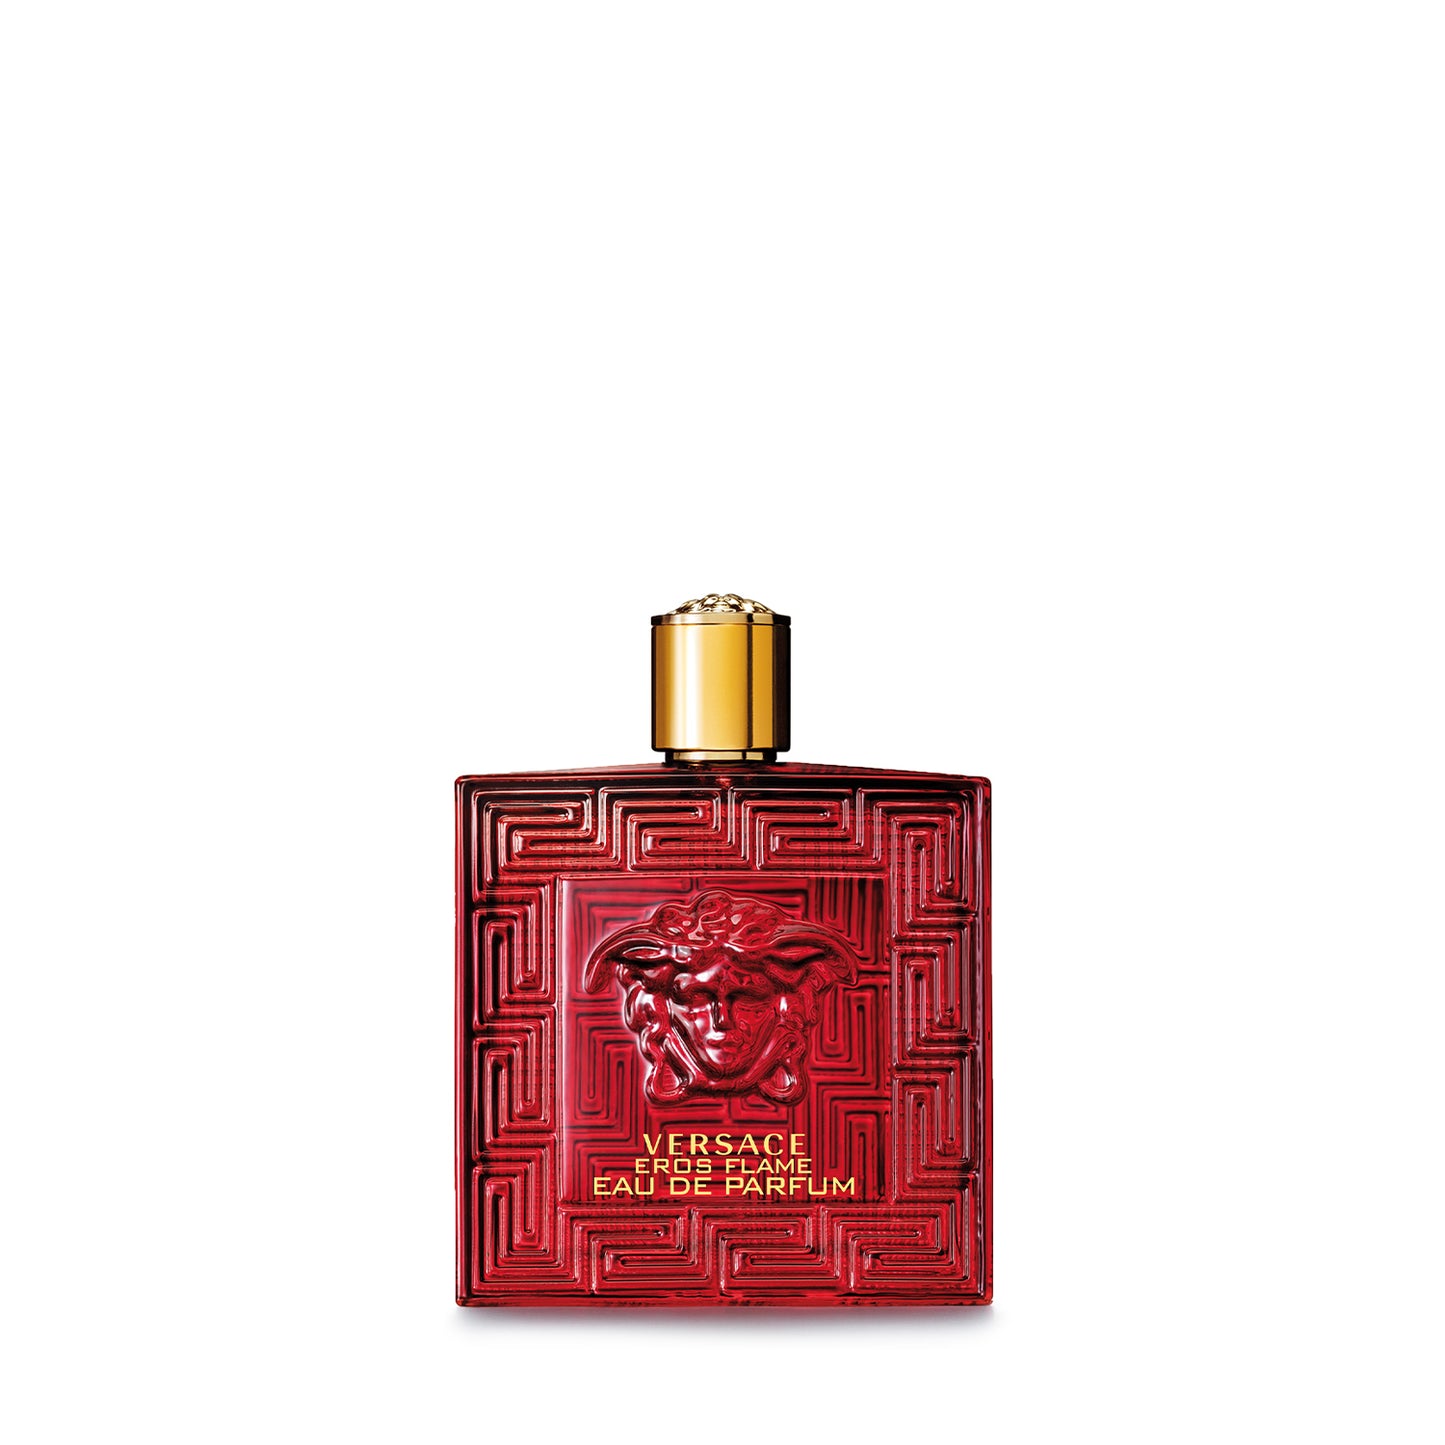 Versace Eros Flame Eau de Parfum. 3.4Oz/100ml